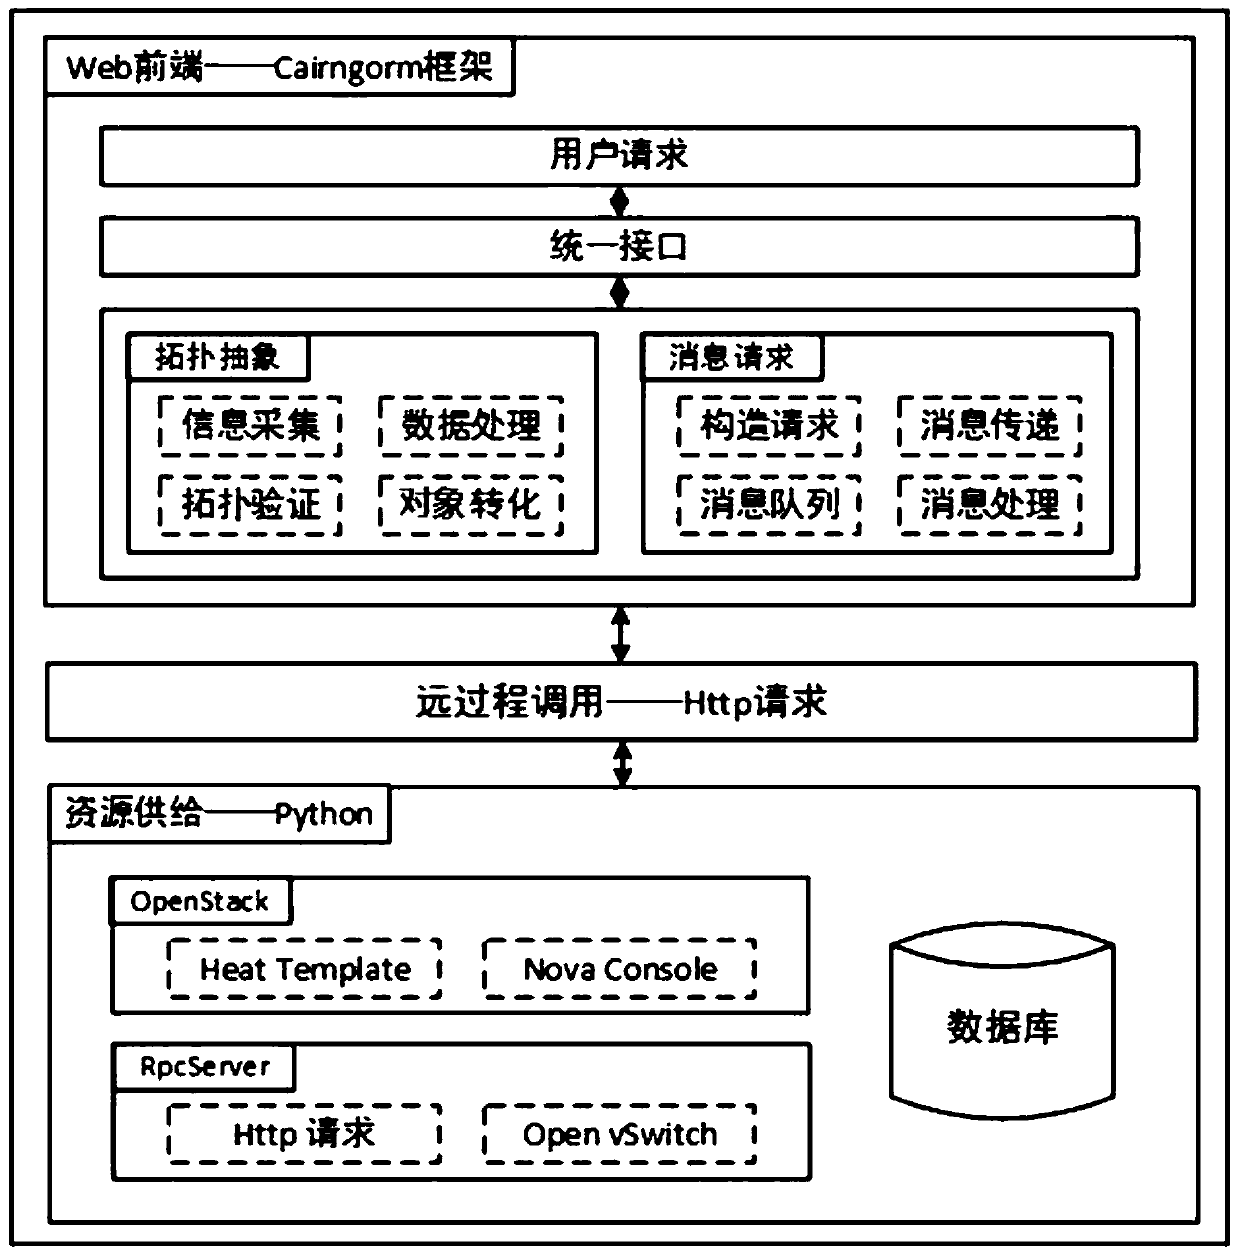 A visual management method of virtual data center based on cairngorm framework